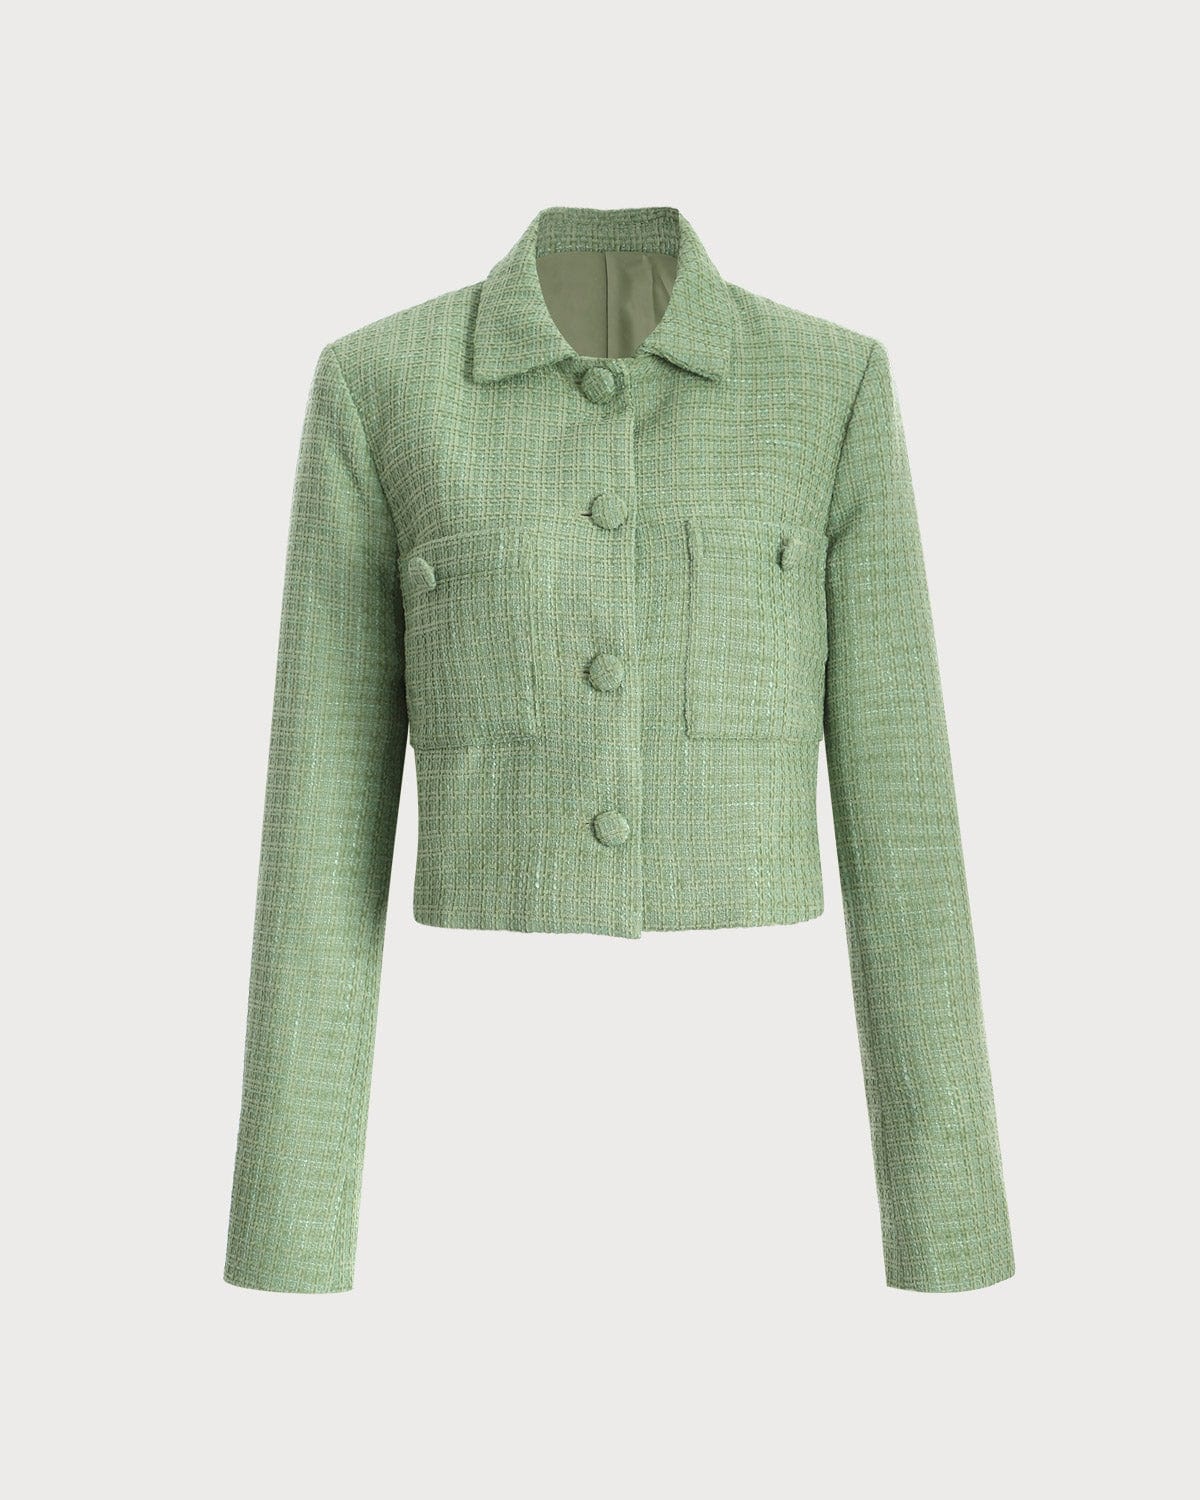 Rihoas Women's Solid Collared Plaid Tweed Jacket, Green / L